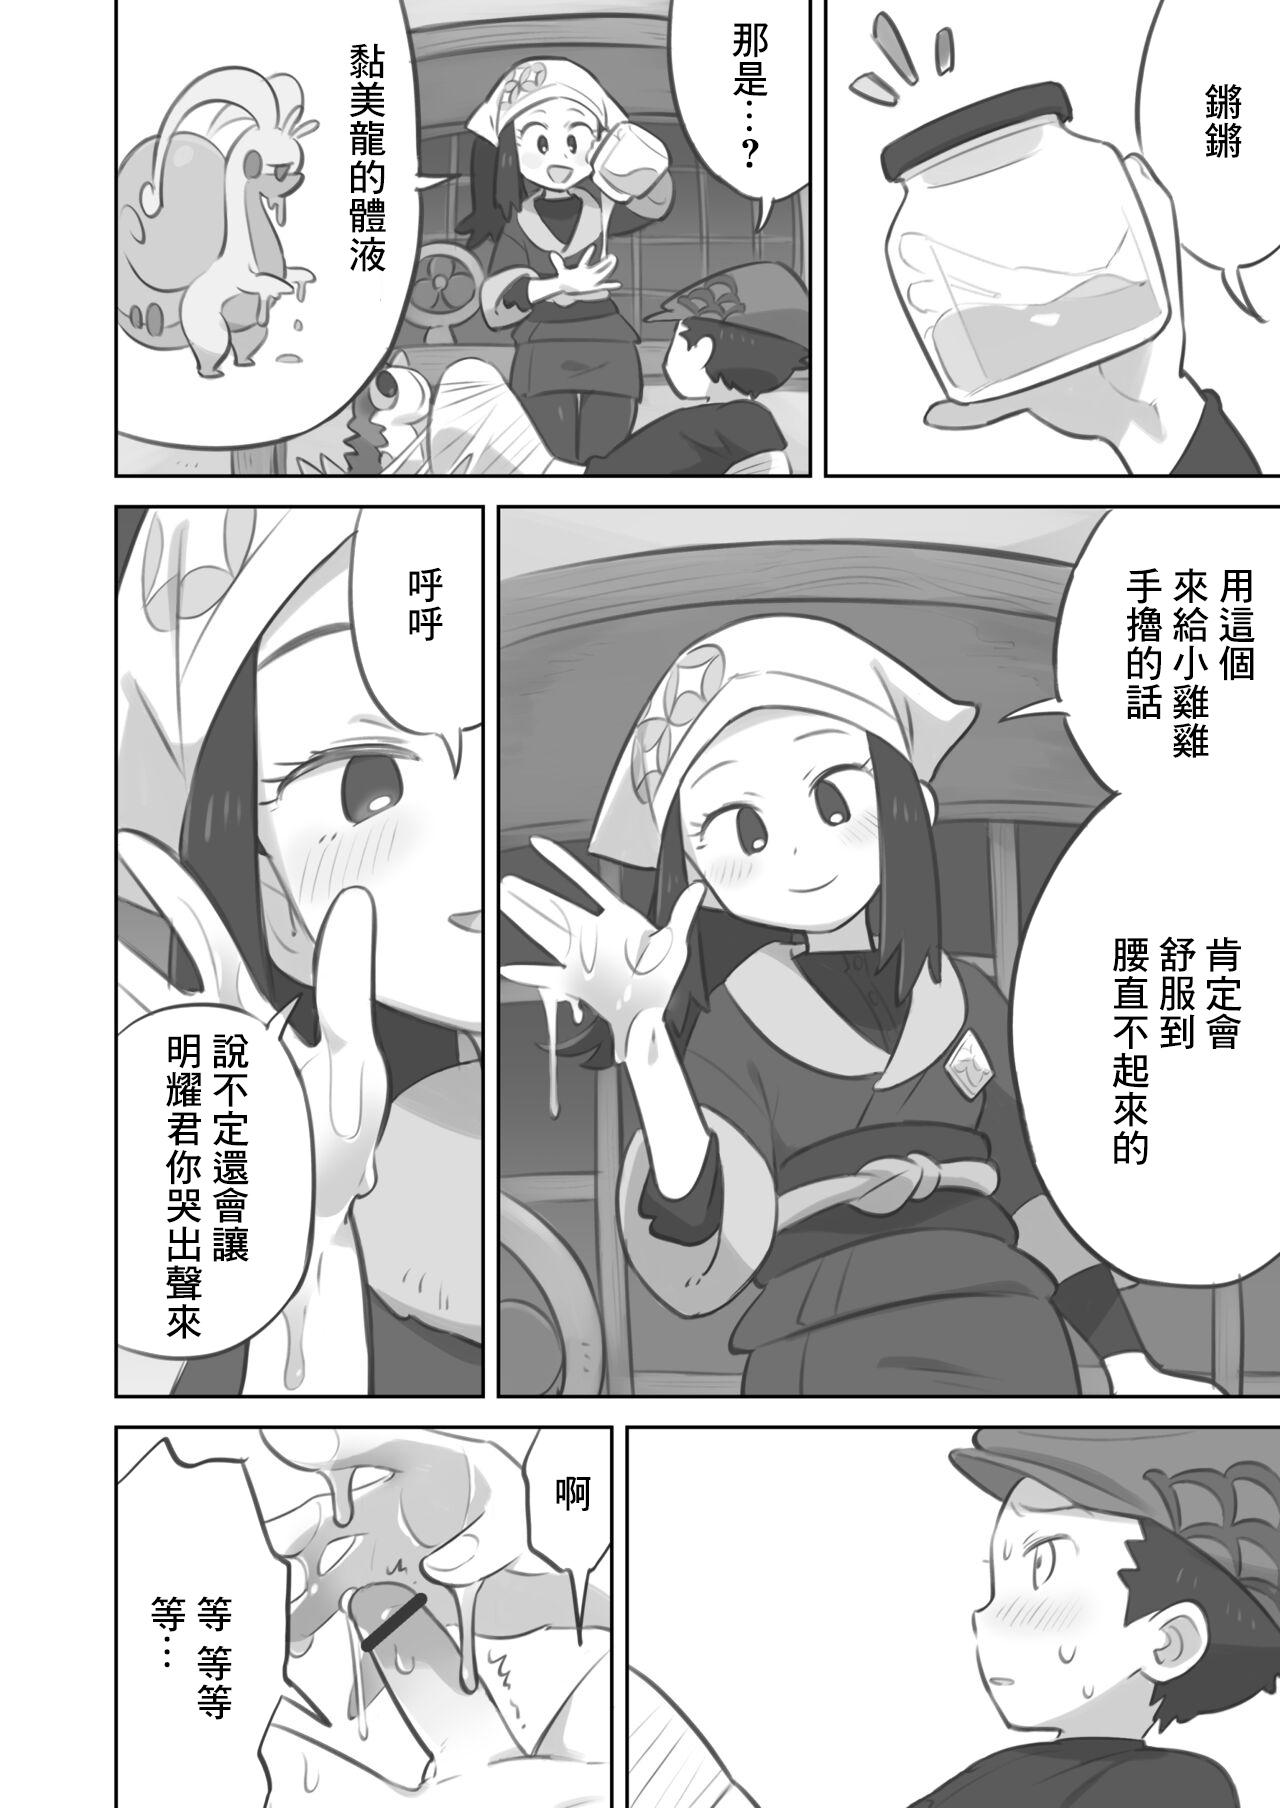 Massages Tekoki Manga - Pokemon | pocket monsters Urine - Page 4